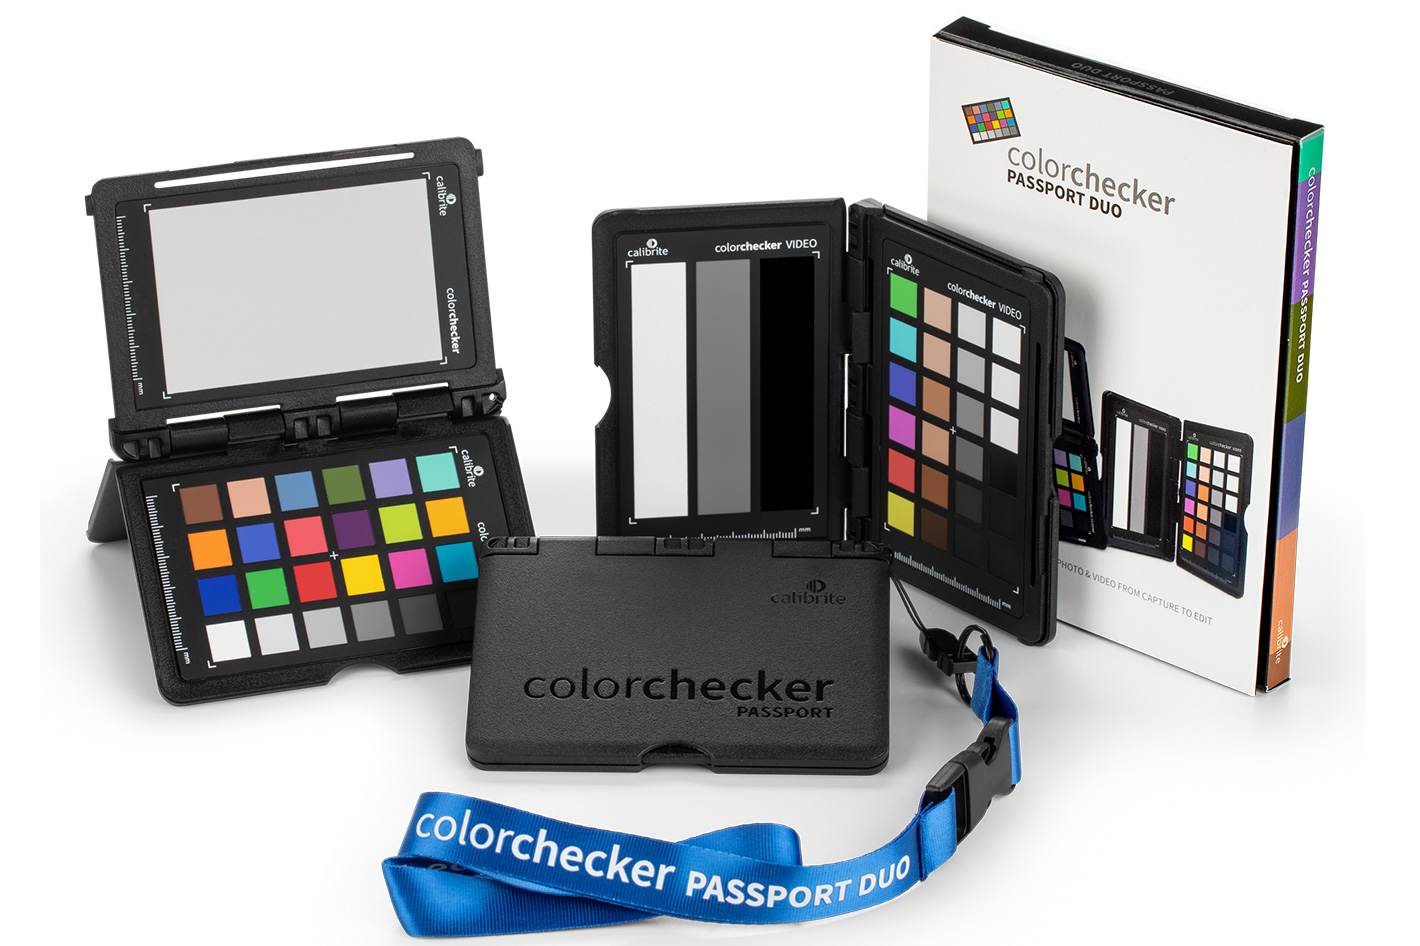 ColorChecker Passport DUO: a Passport for photo and video